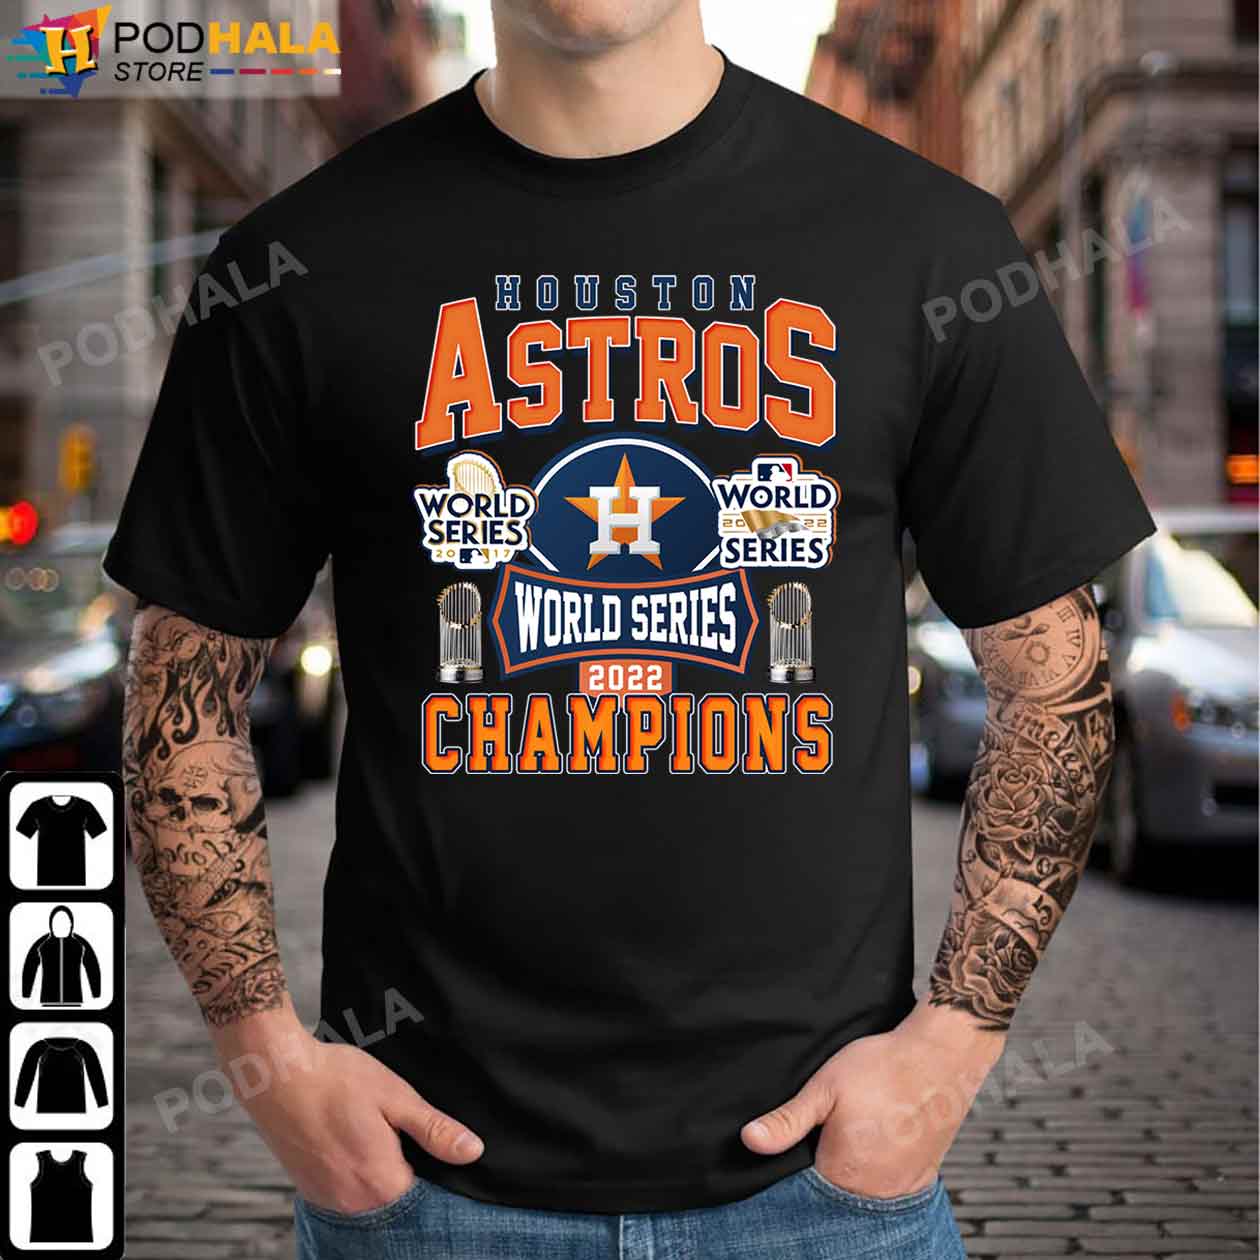 astros t shirt champion